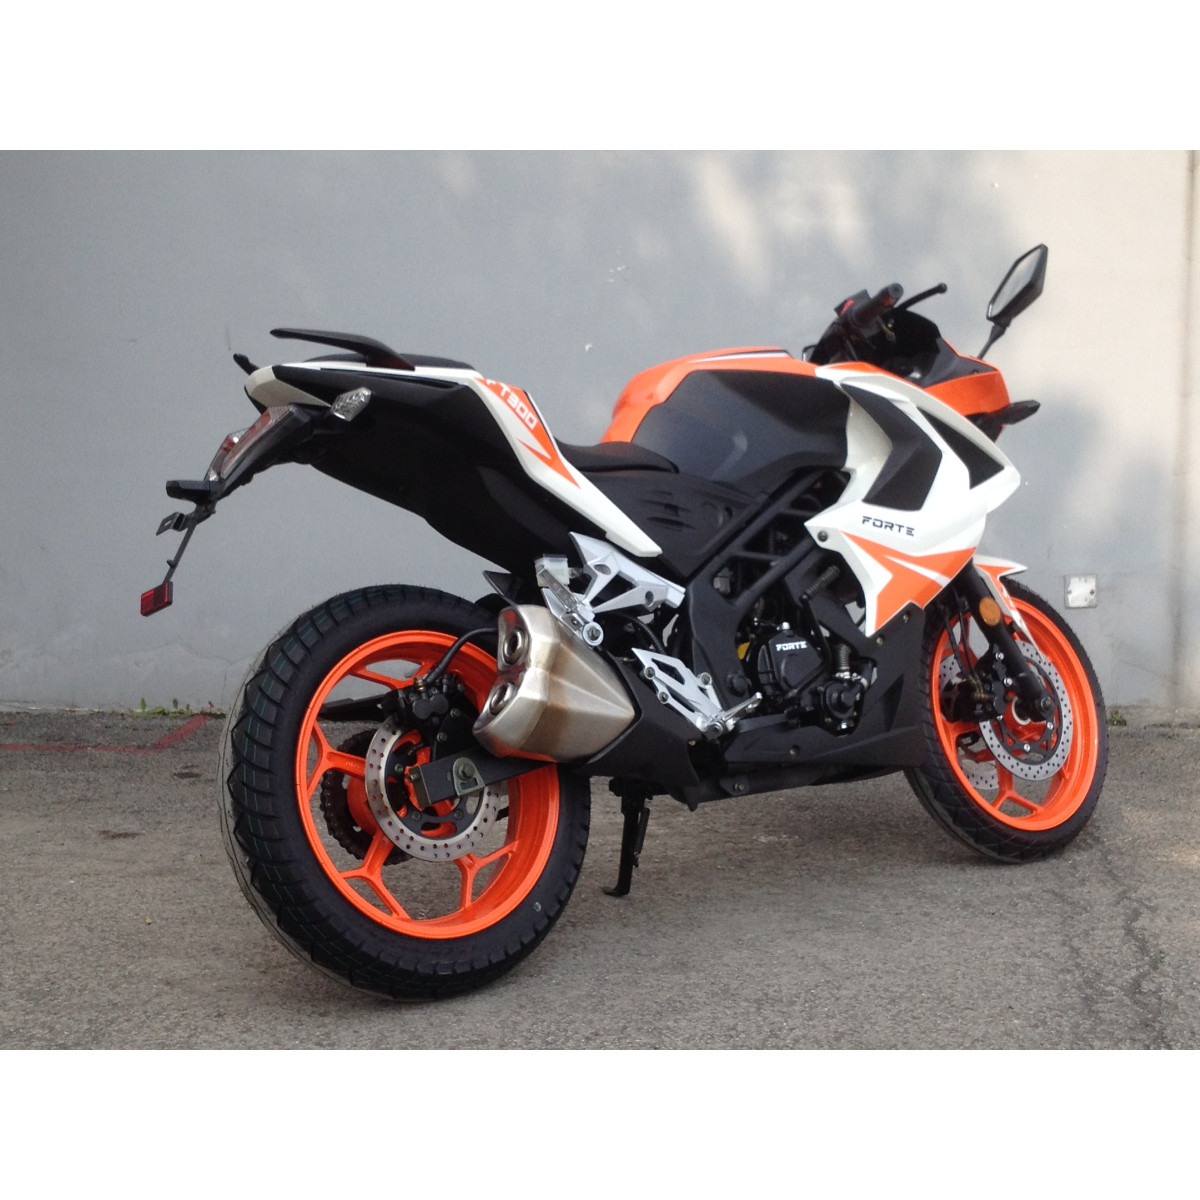 Мотоцикл FT300-R1 Forte помаранчево-білий